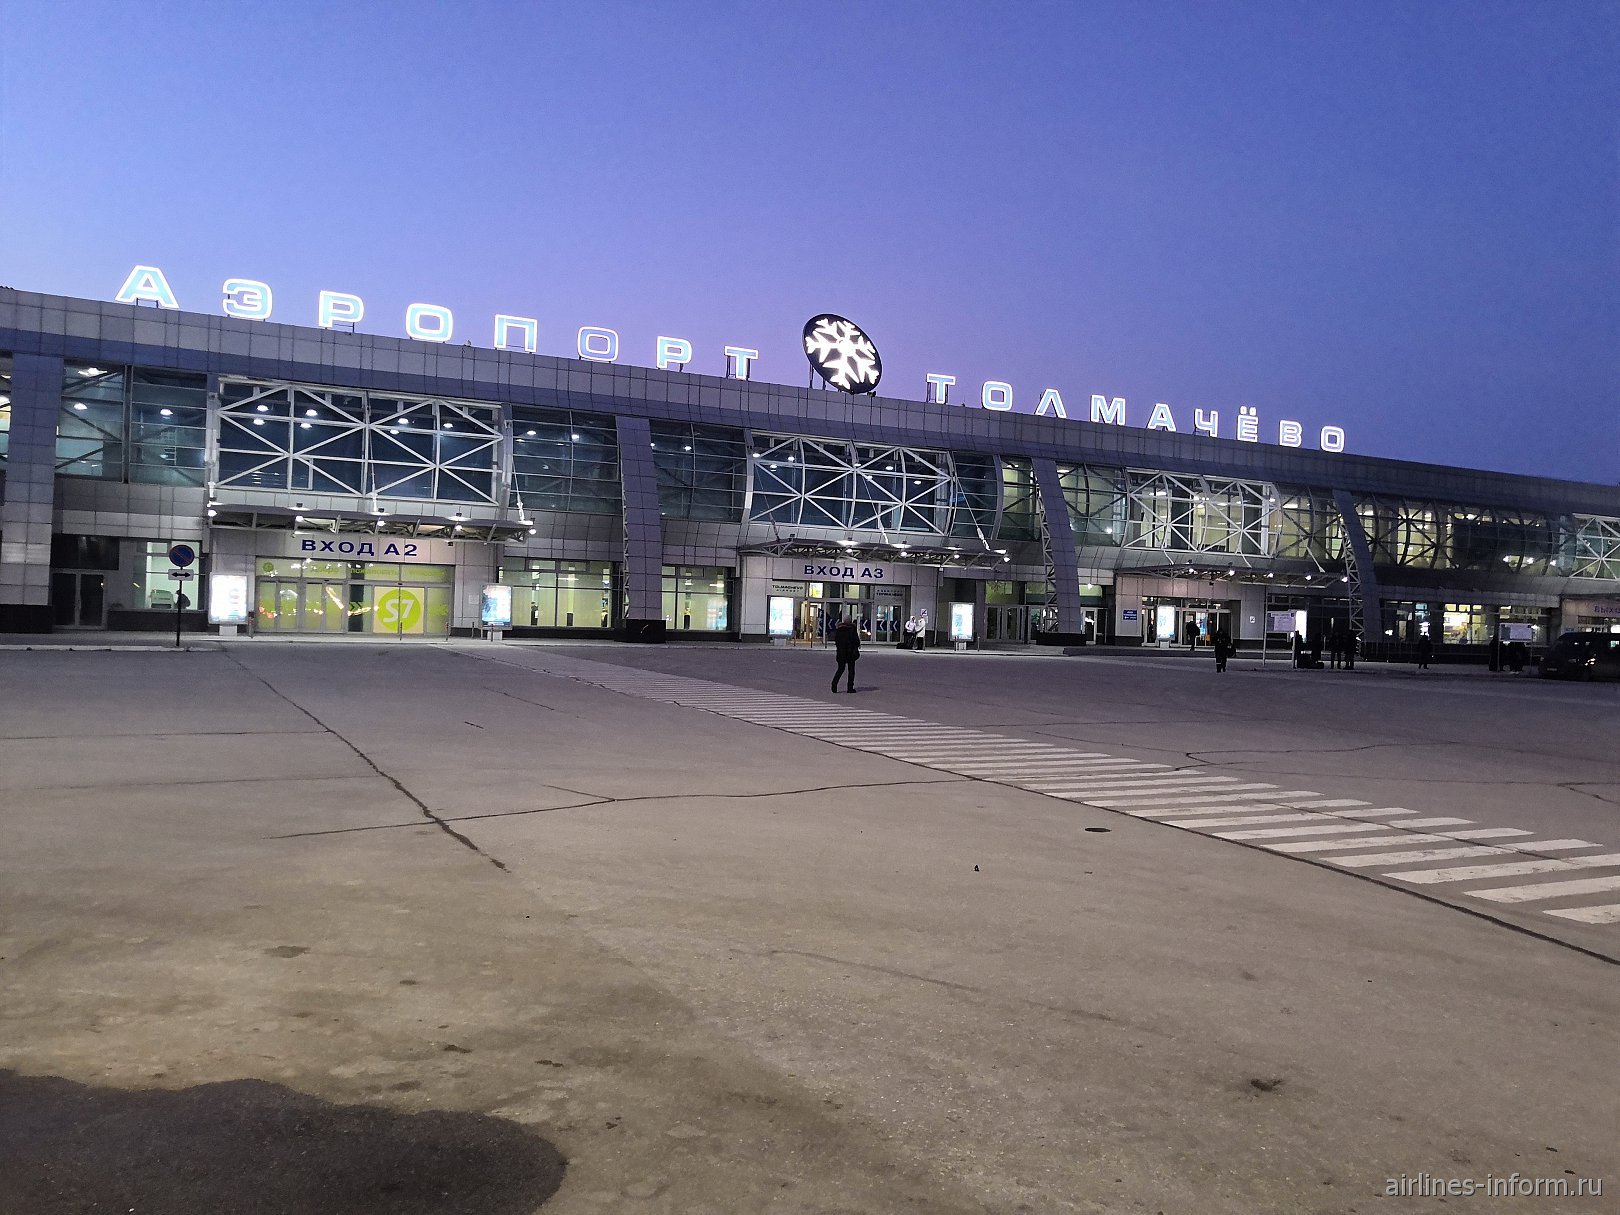 Номер аэропорта новосибирска. Толмачева аэропорт Новосибирск. Аэропорт Толмачево Новосибирск терминал а. Терминал а Толмачева Новосибирск. Толмачева аэропорт Новосибирск внутри.